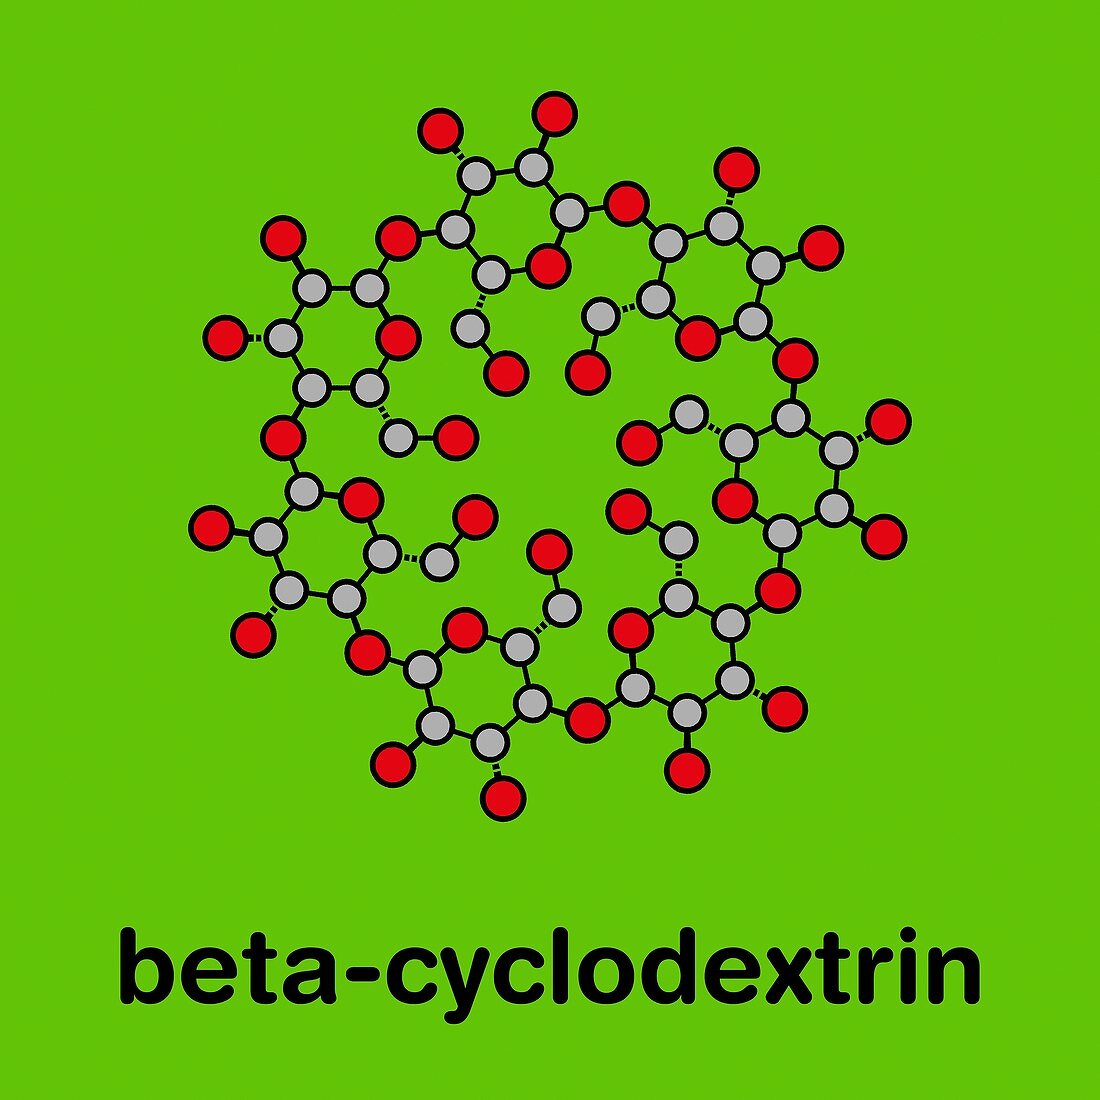 Beta-cyclodextrin molecule, illustration